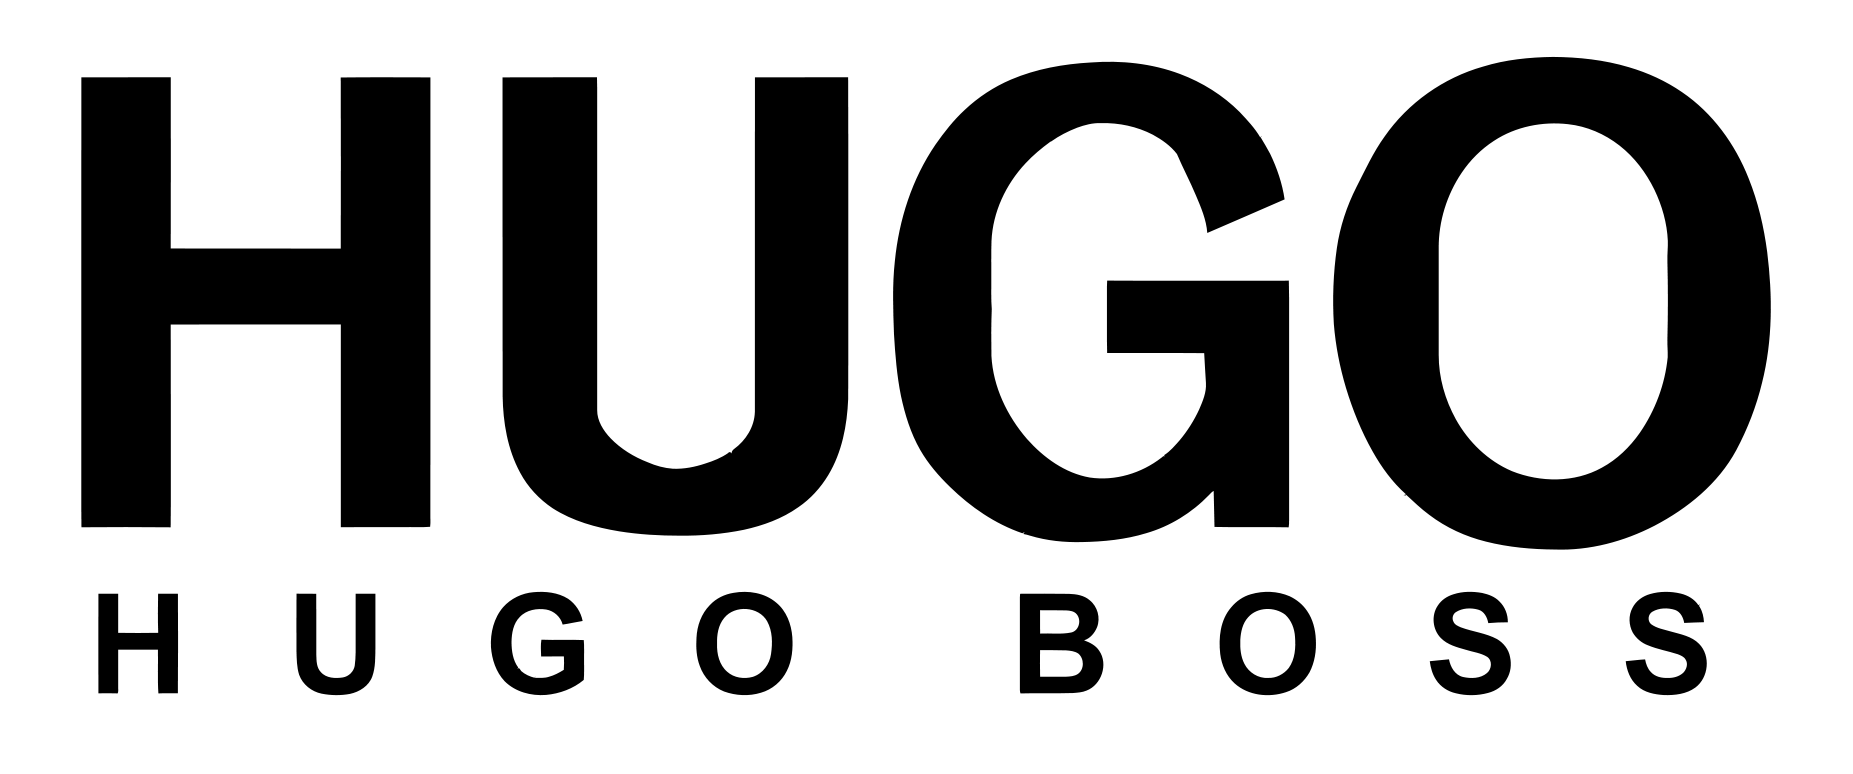 Boss Logo - Meaning Hugo Boss logo and symbol. history and evolution